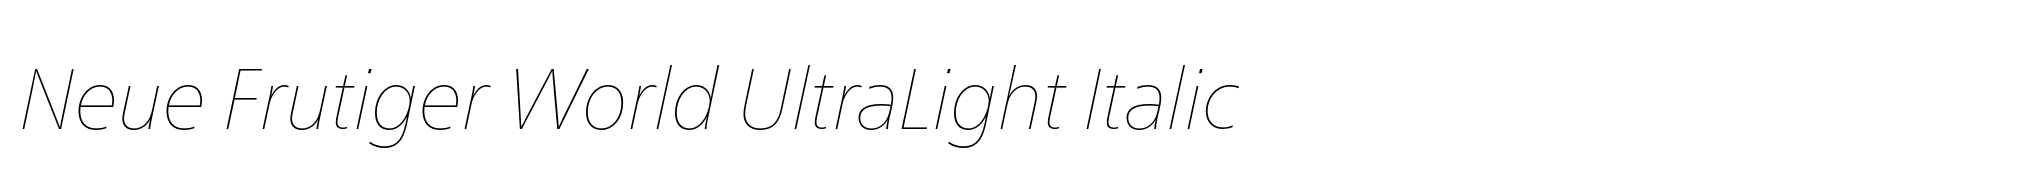 Neue Frutiger World UltraLight Italic image